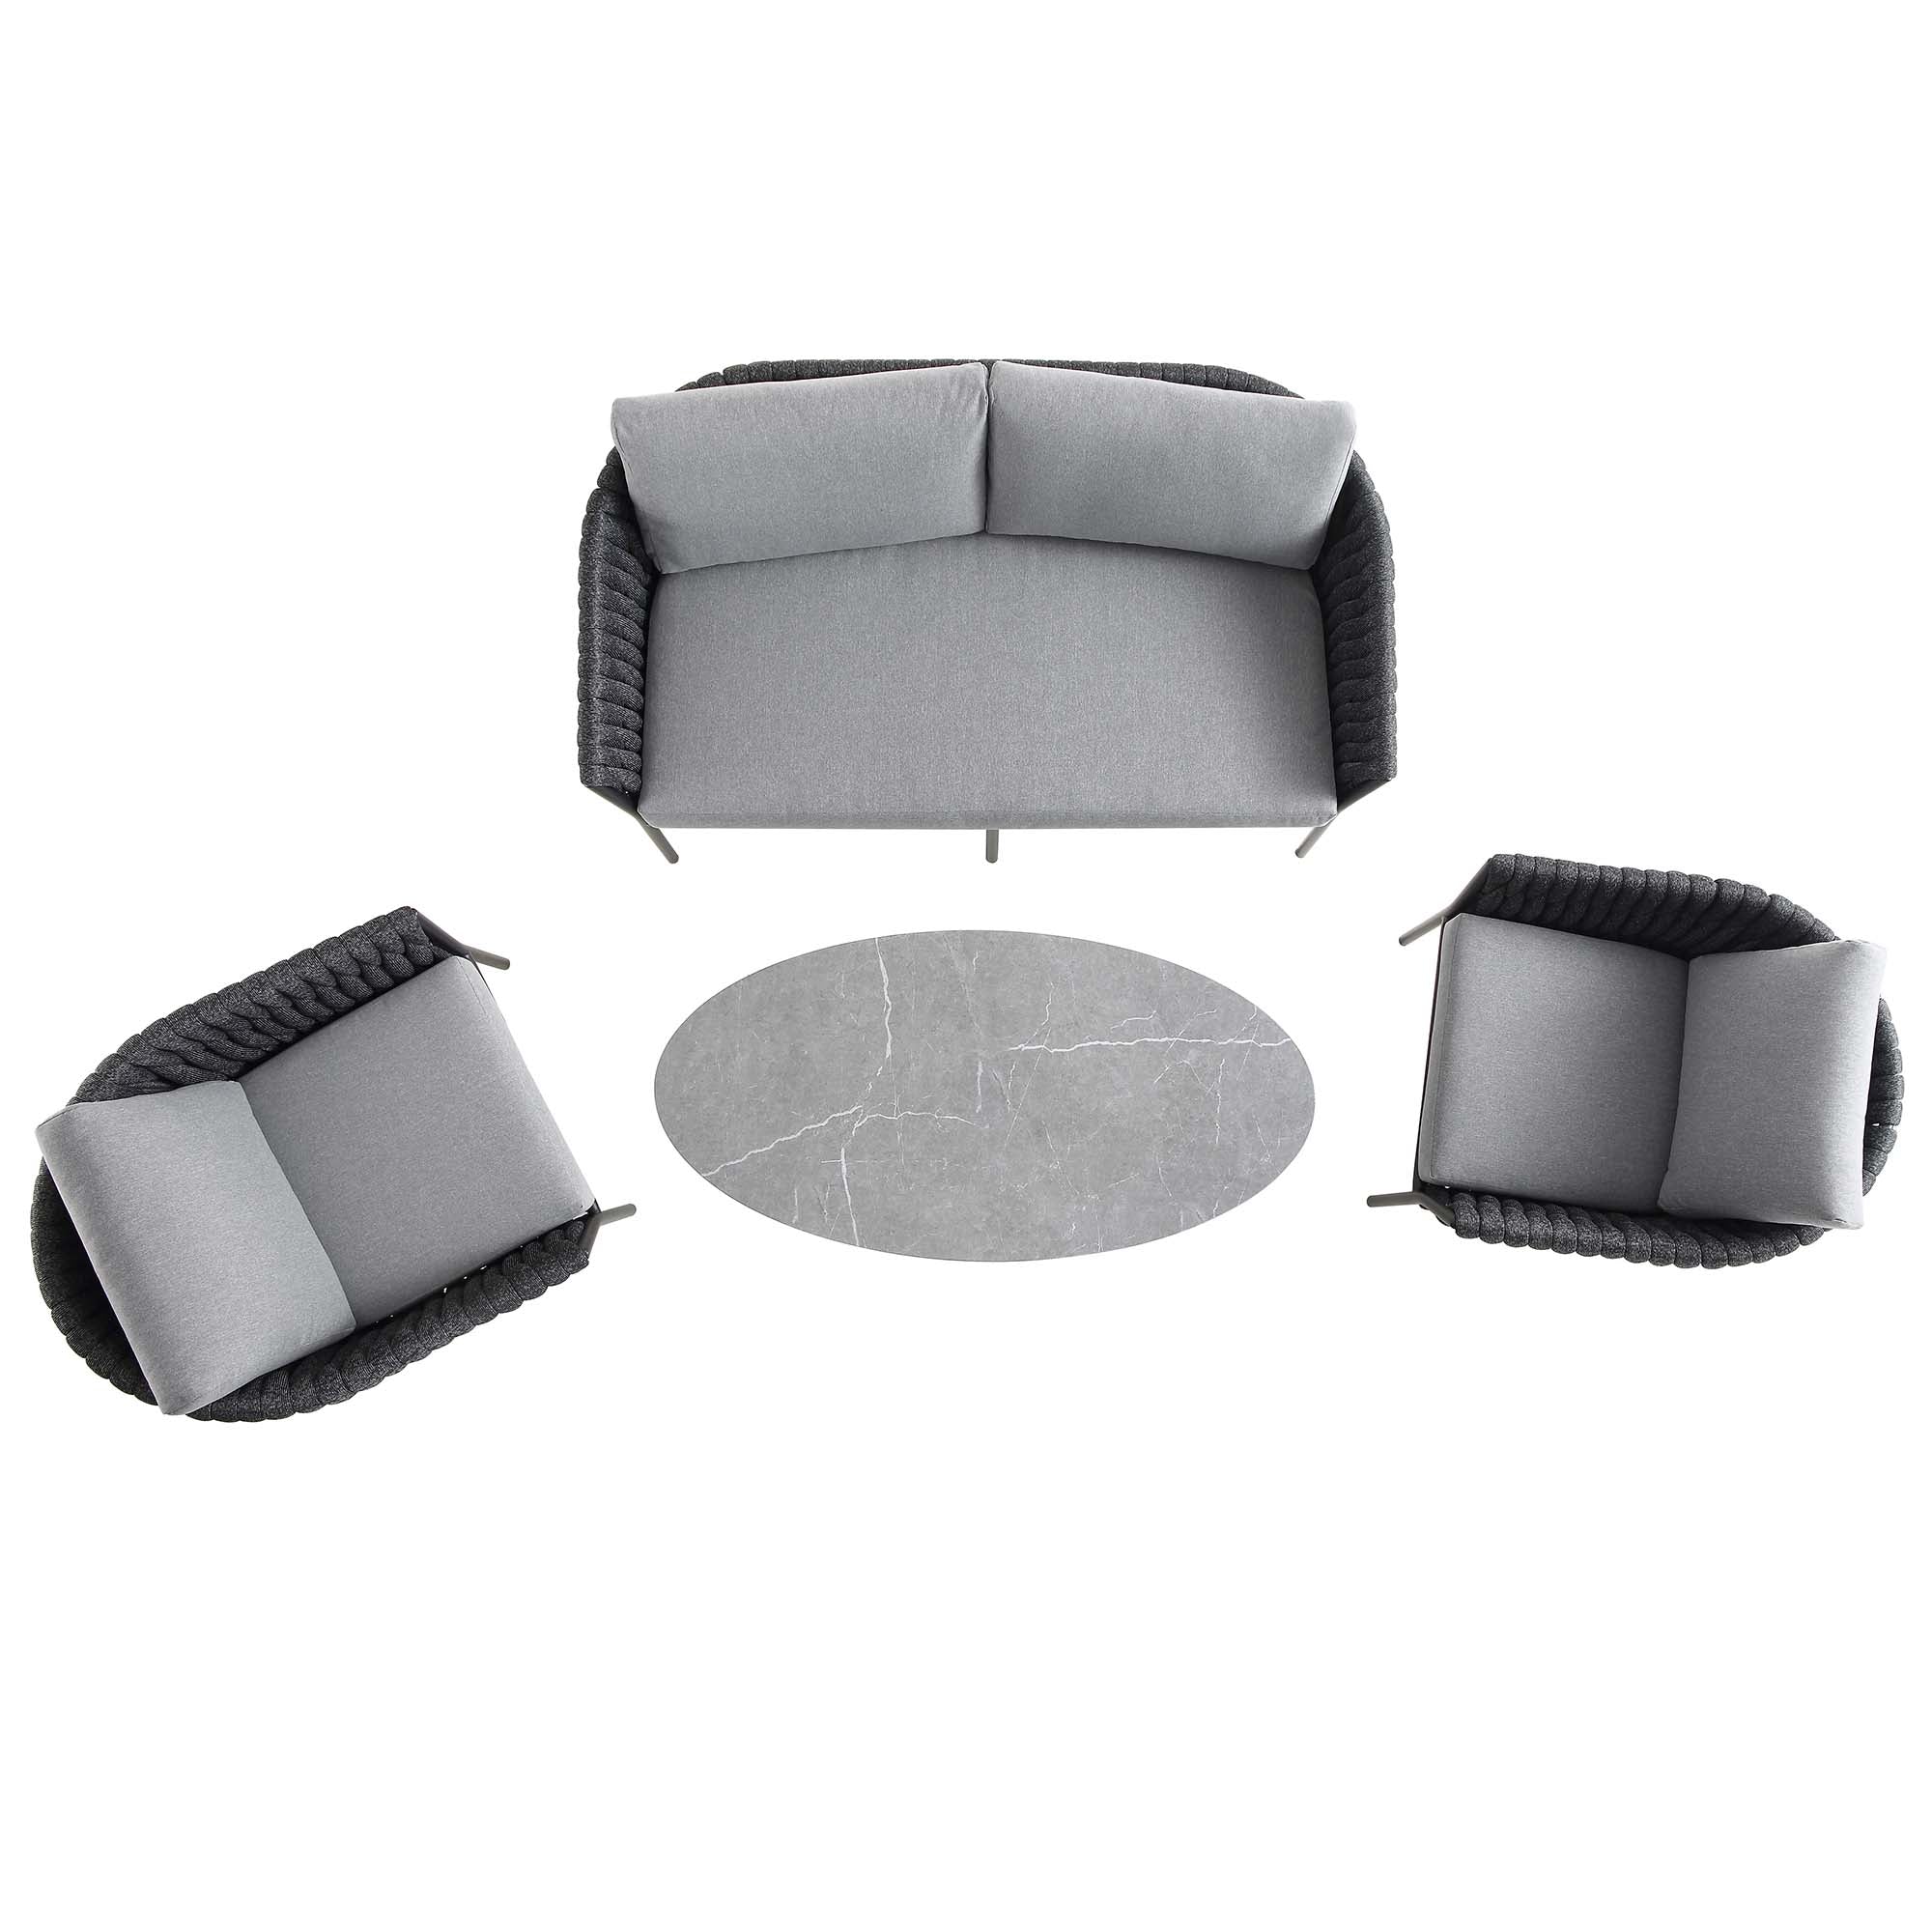 Montebello 4-Seater Outdoor Black Rope and Aluminium Sofa Set with Grey Ceramic Coffee Table